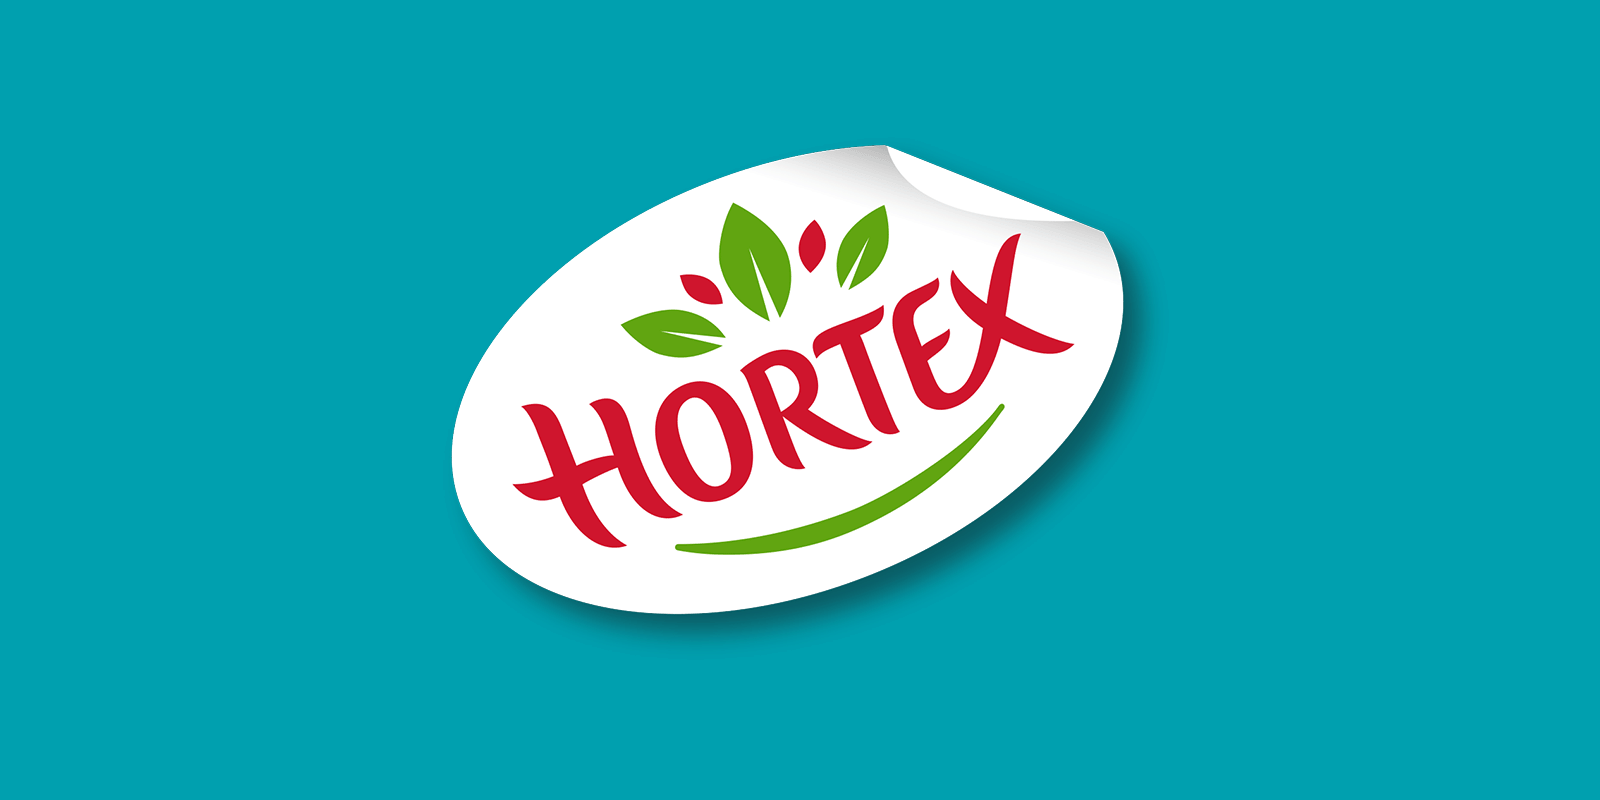 HORTEX rozstrzygnął przetarg KERRIS MEDIARUN COM AI HORTEX LOGO